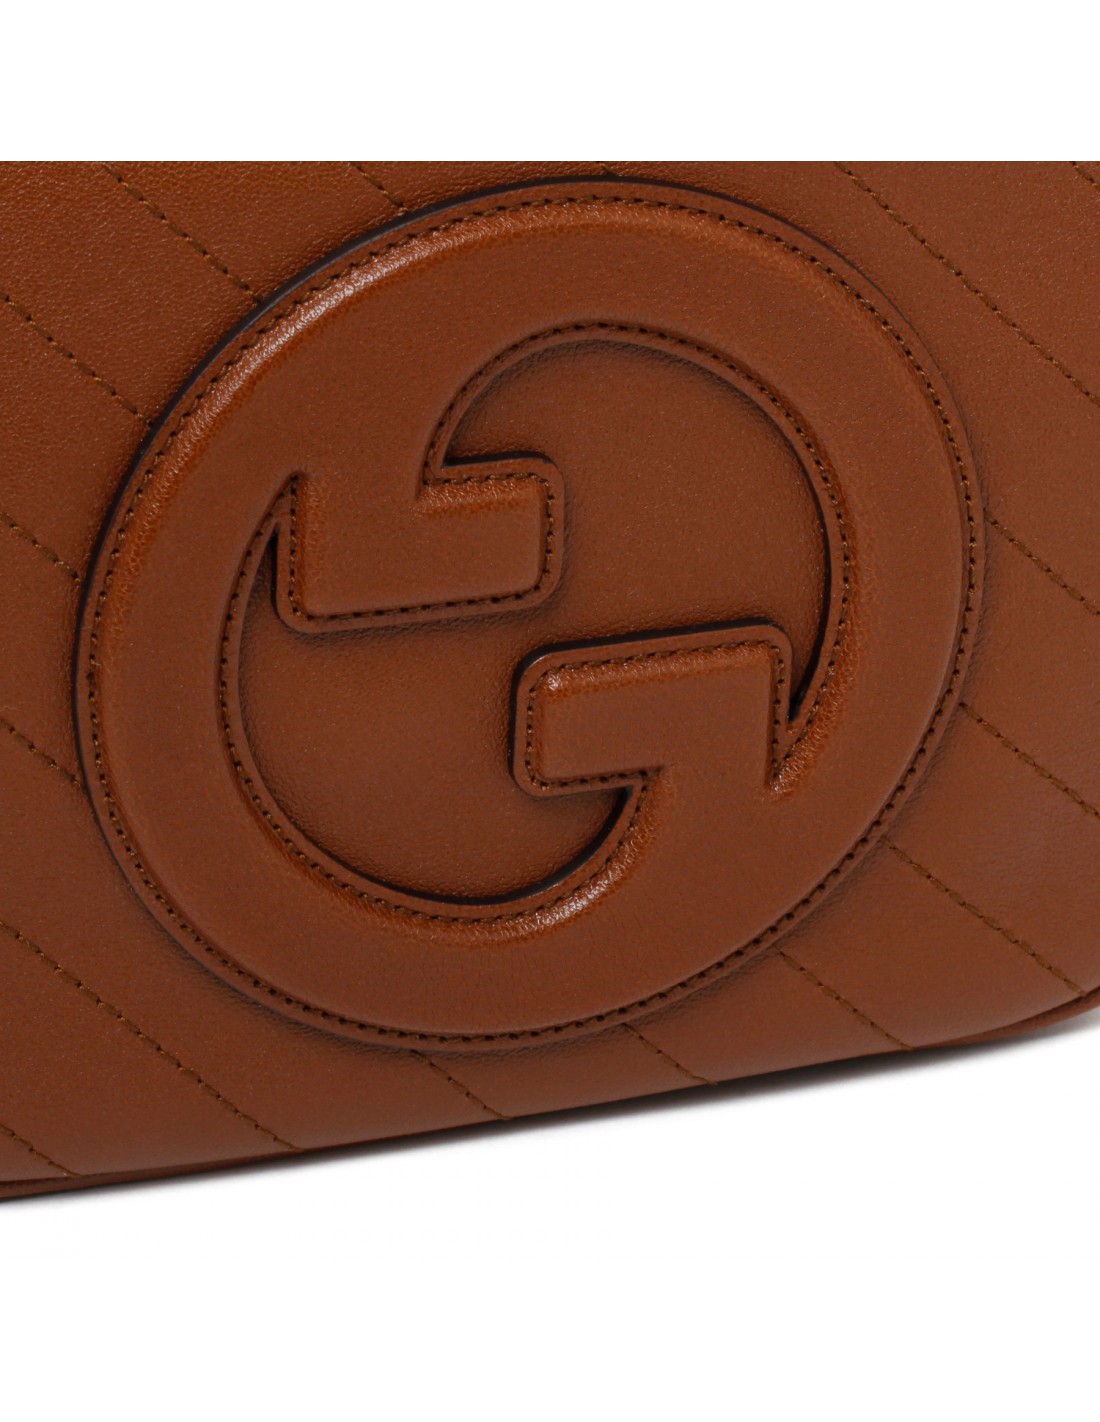 Gucci Blondie small shoulder bag in orange leather